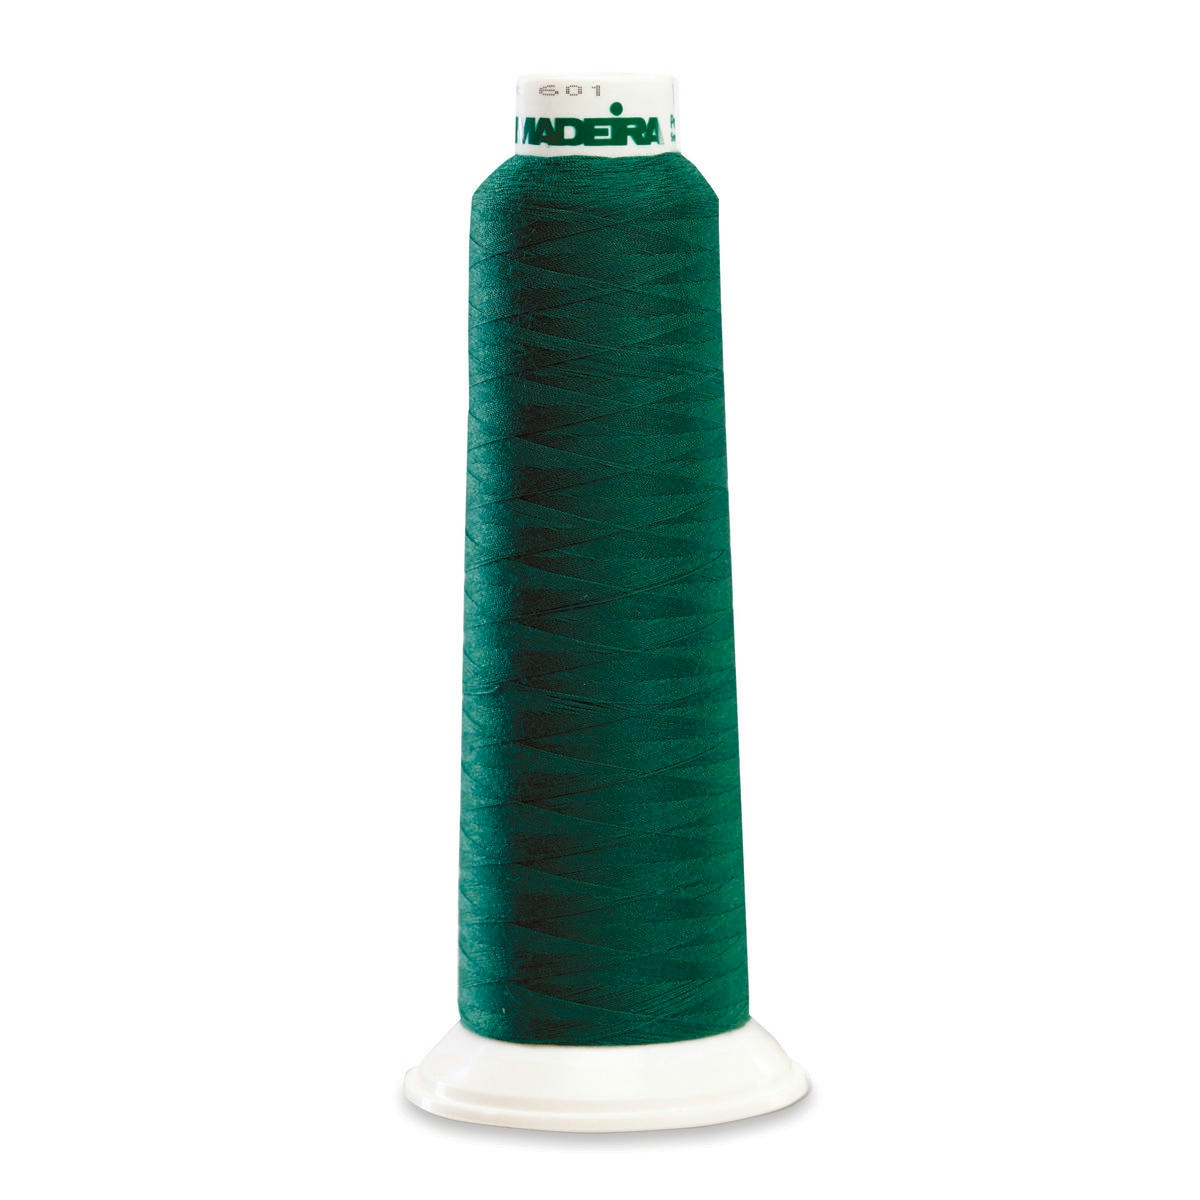 Madeira Aerolock Premium Serger Thread 2000 Yard Cone - PINE GREEN